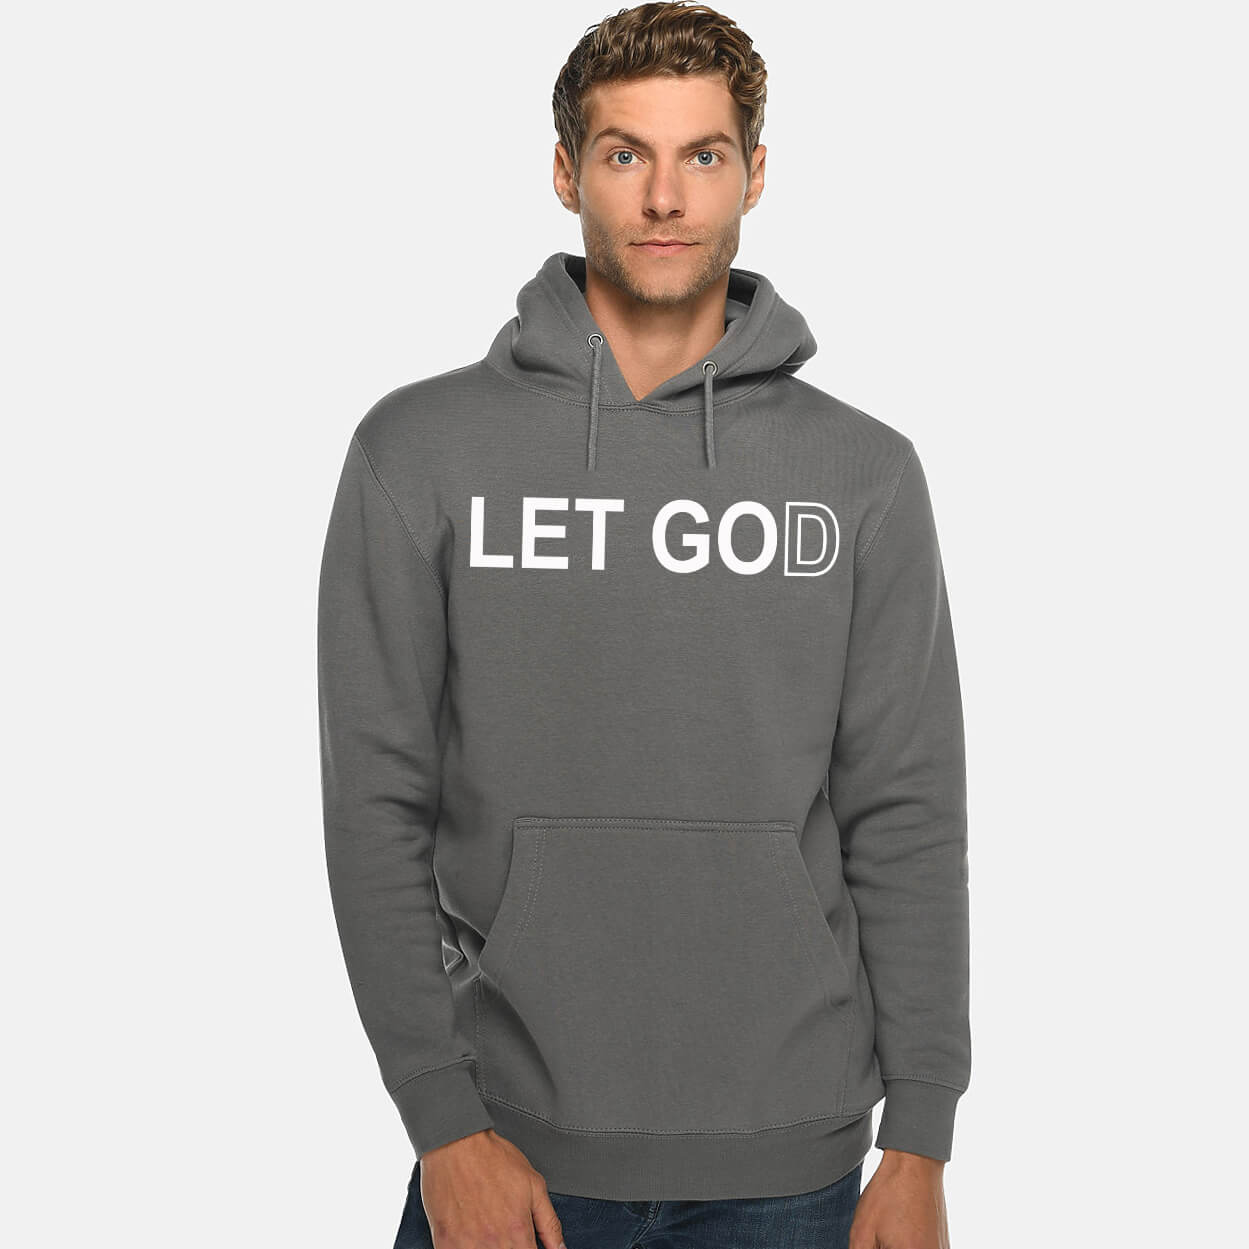 Let Go Let God Unisex Heavyweight Sweatshirt Hoodie